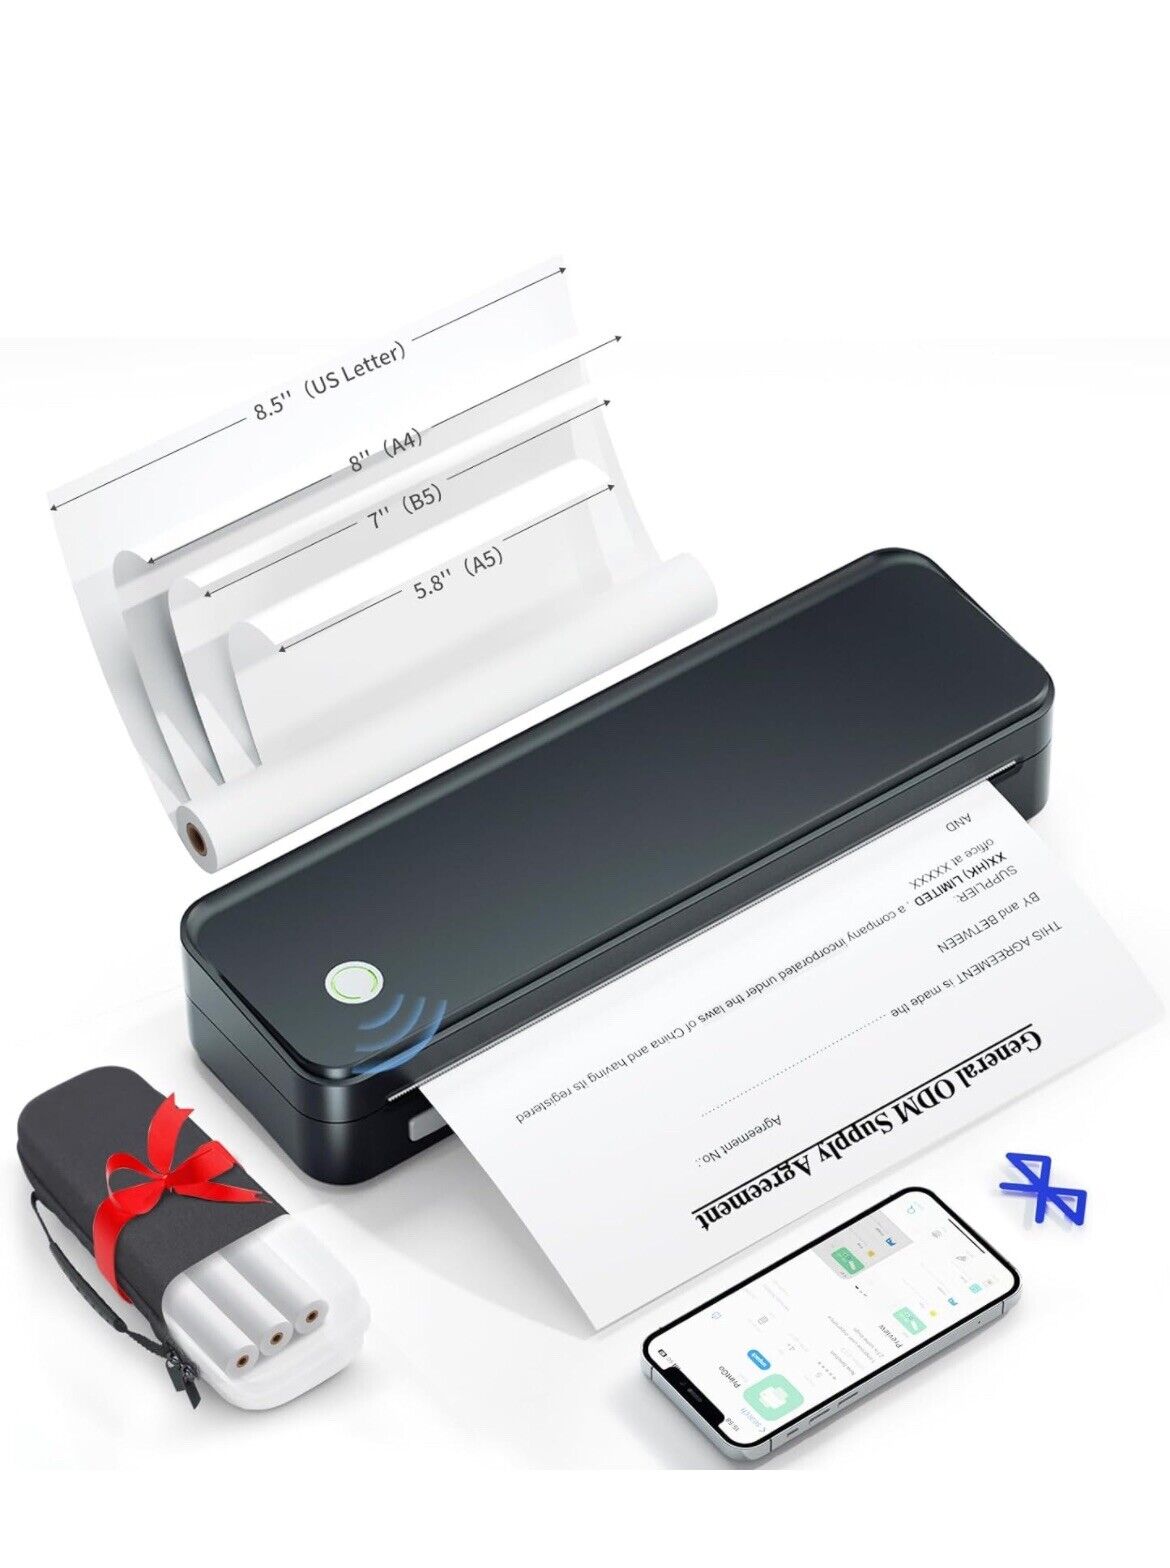 Aixiqee Portable-Wireless-Printer, Thermal-Bluetooth-Printer for Travel, No. A80